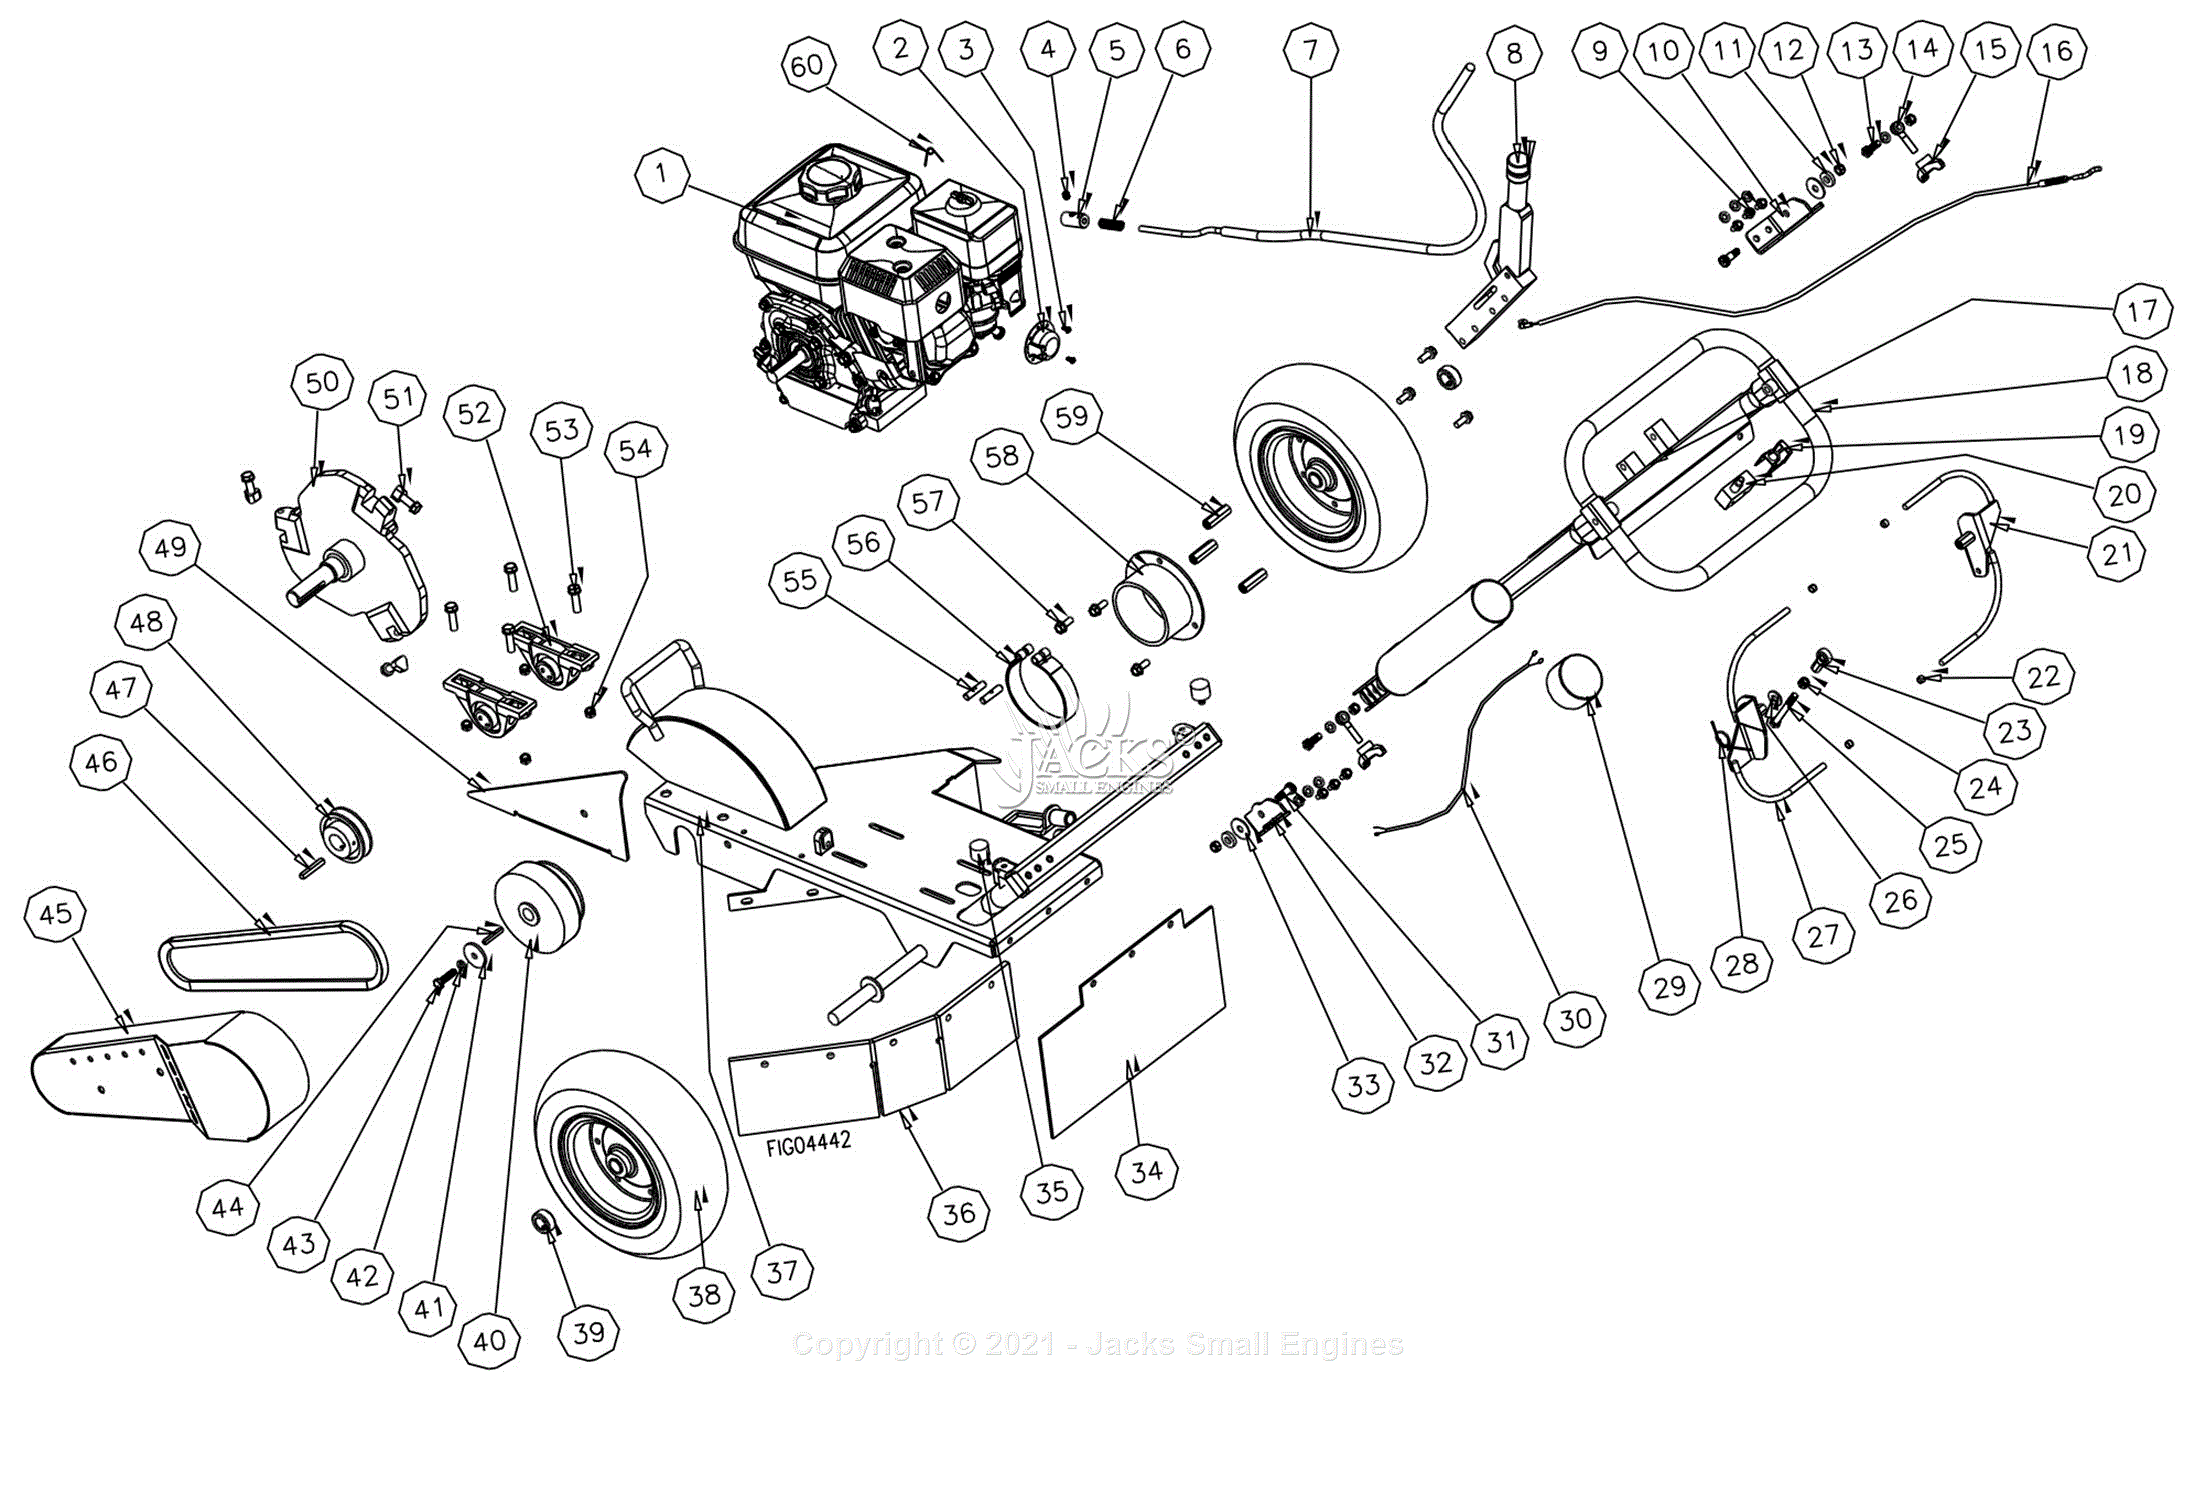 Dosko 2961090 B Parts Diagram for M2961090 Exploded View – Rev B